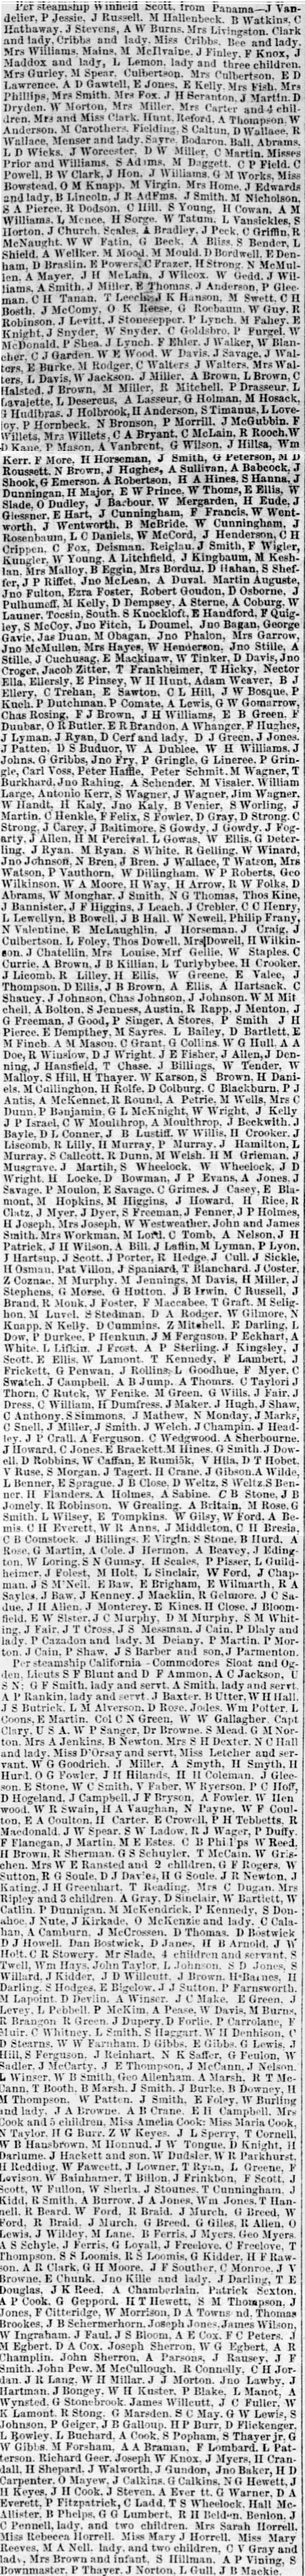 Passengers by the SS Winfield Scott, April 18, 1852. SDU